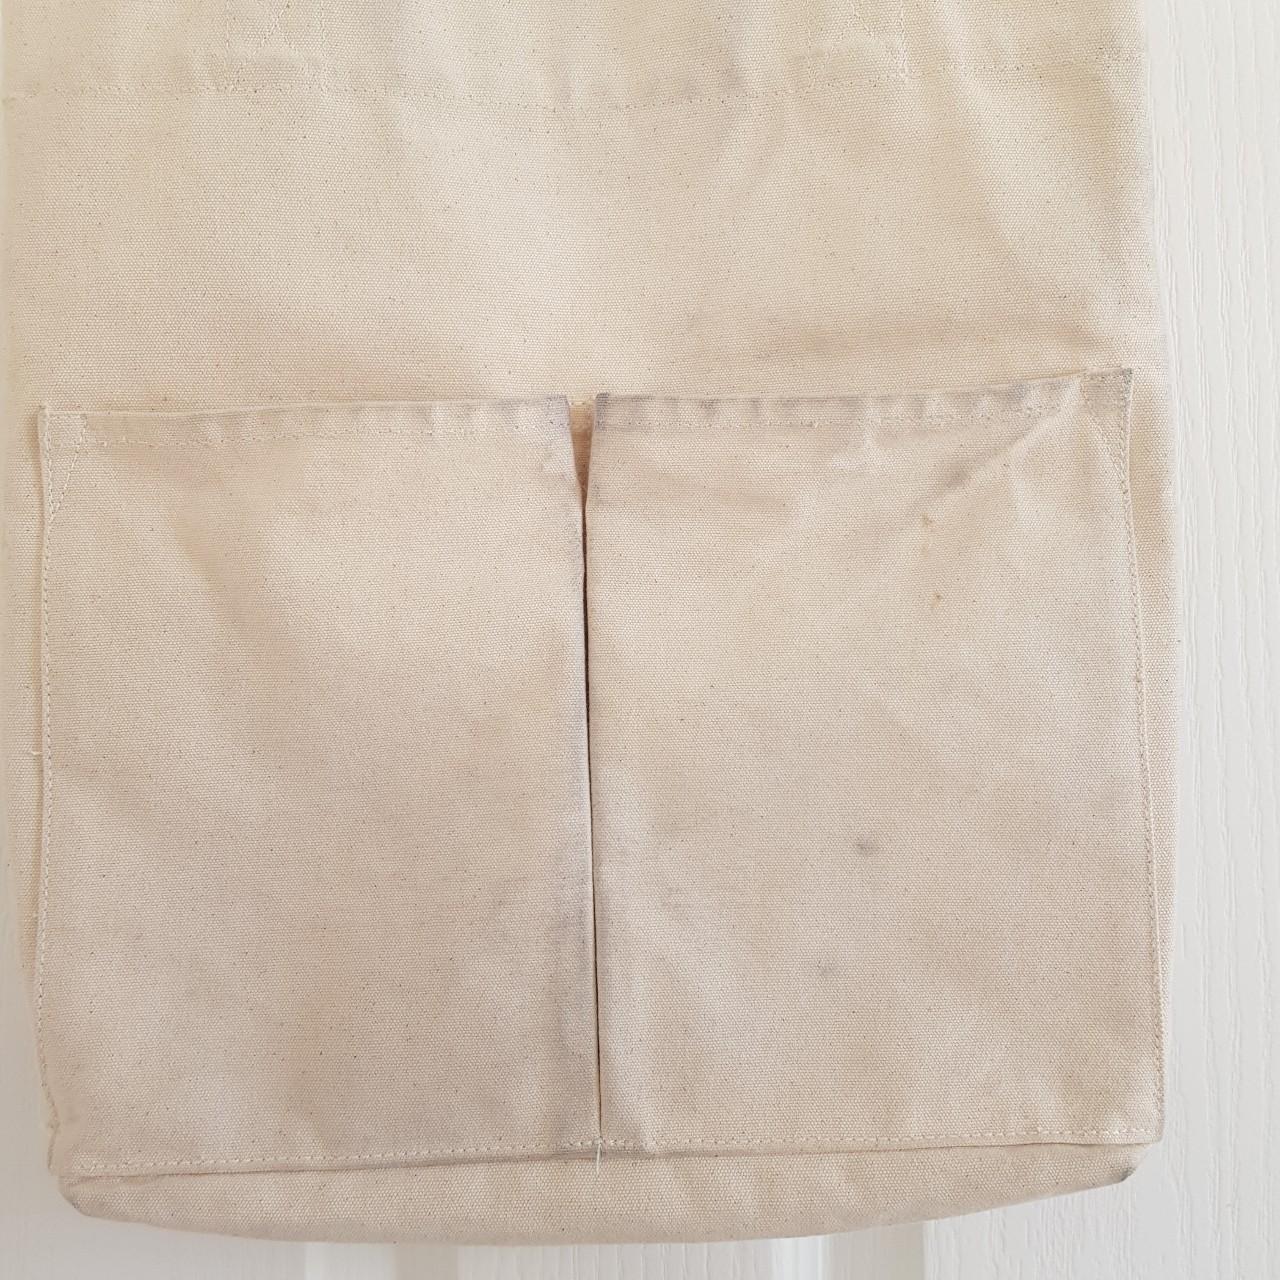 Product Image 4 - White/beige Muji Tote Bag. High